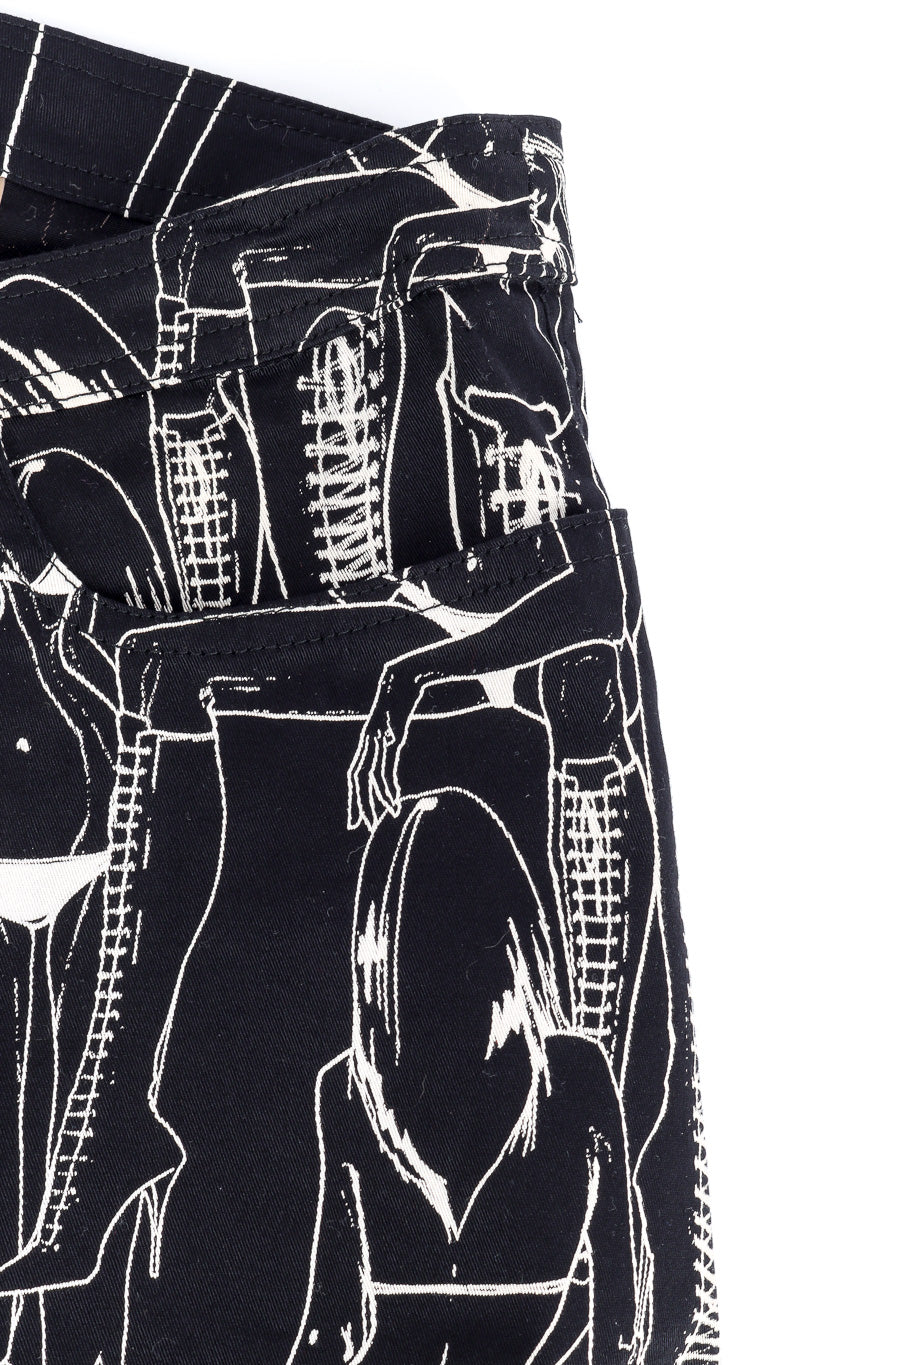 Wrap skirt by John Galliano pocket @recessla